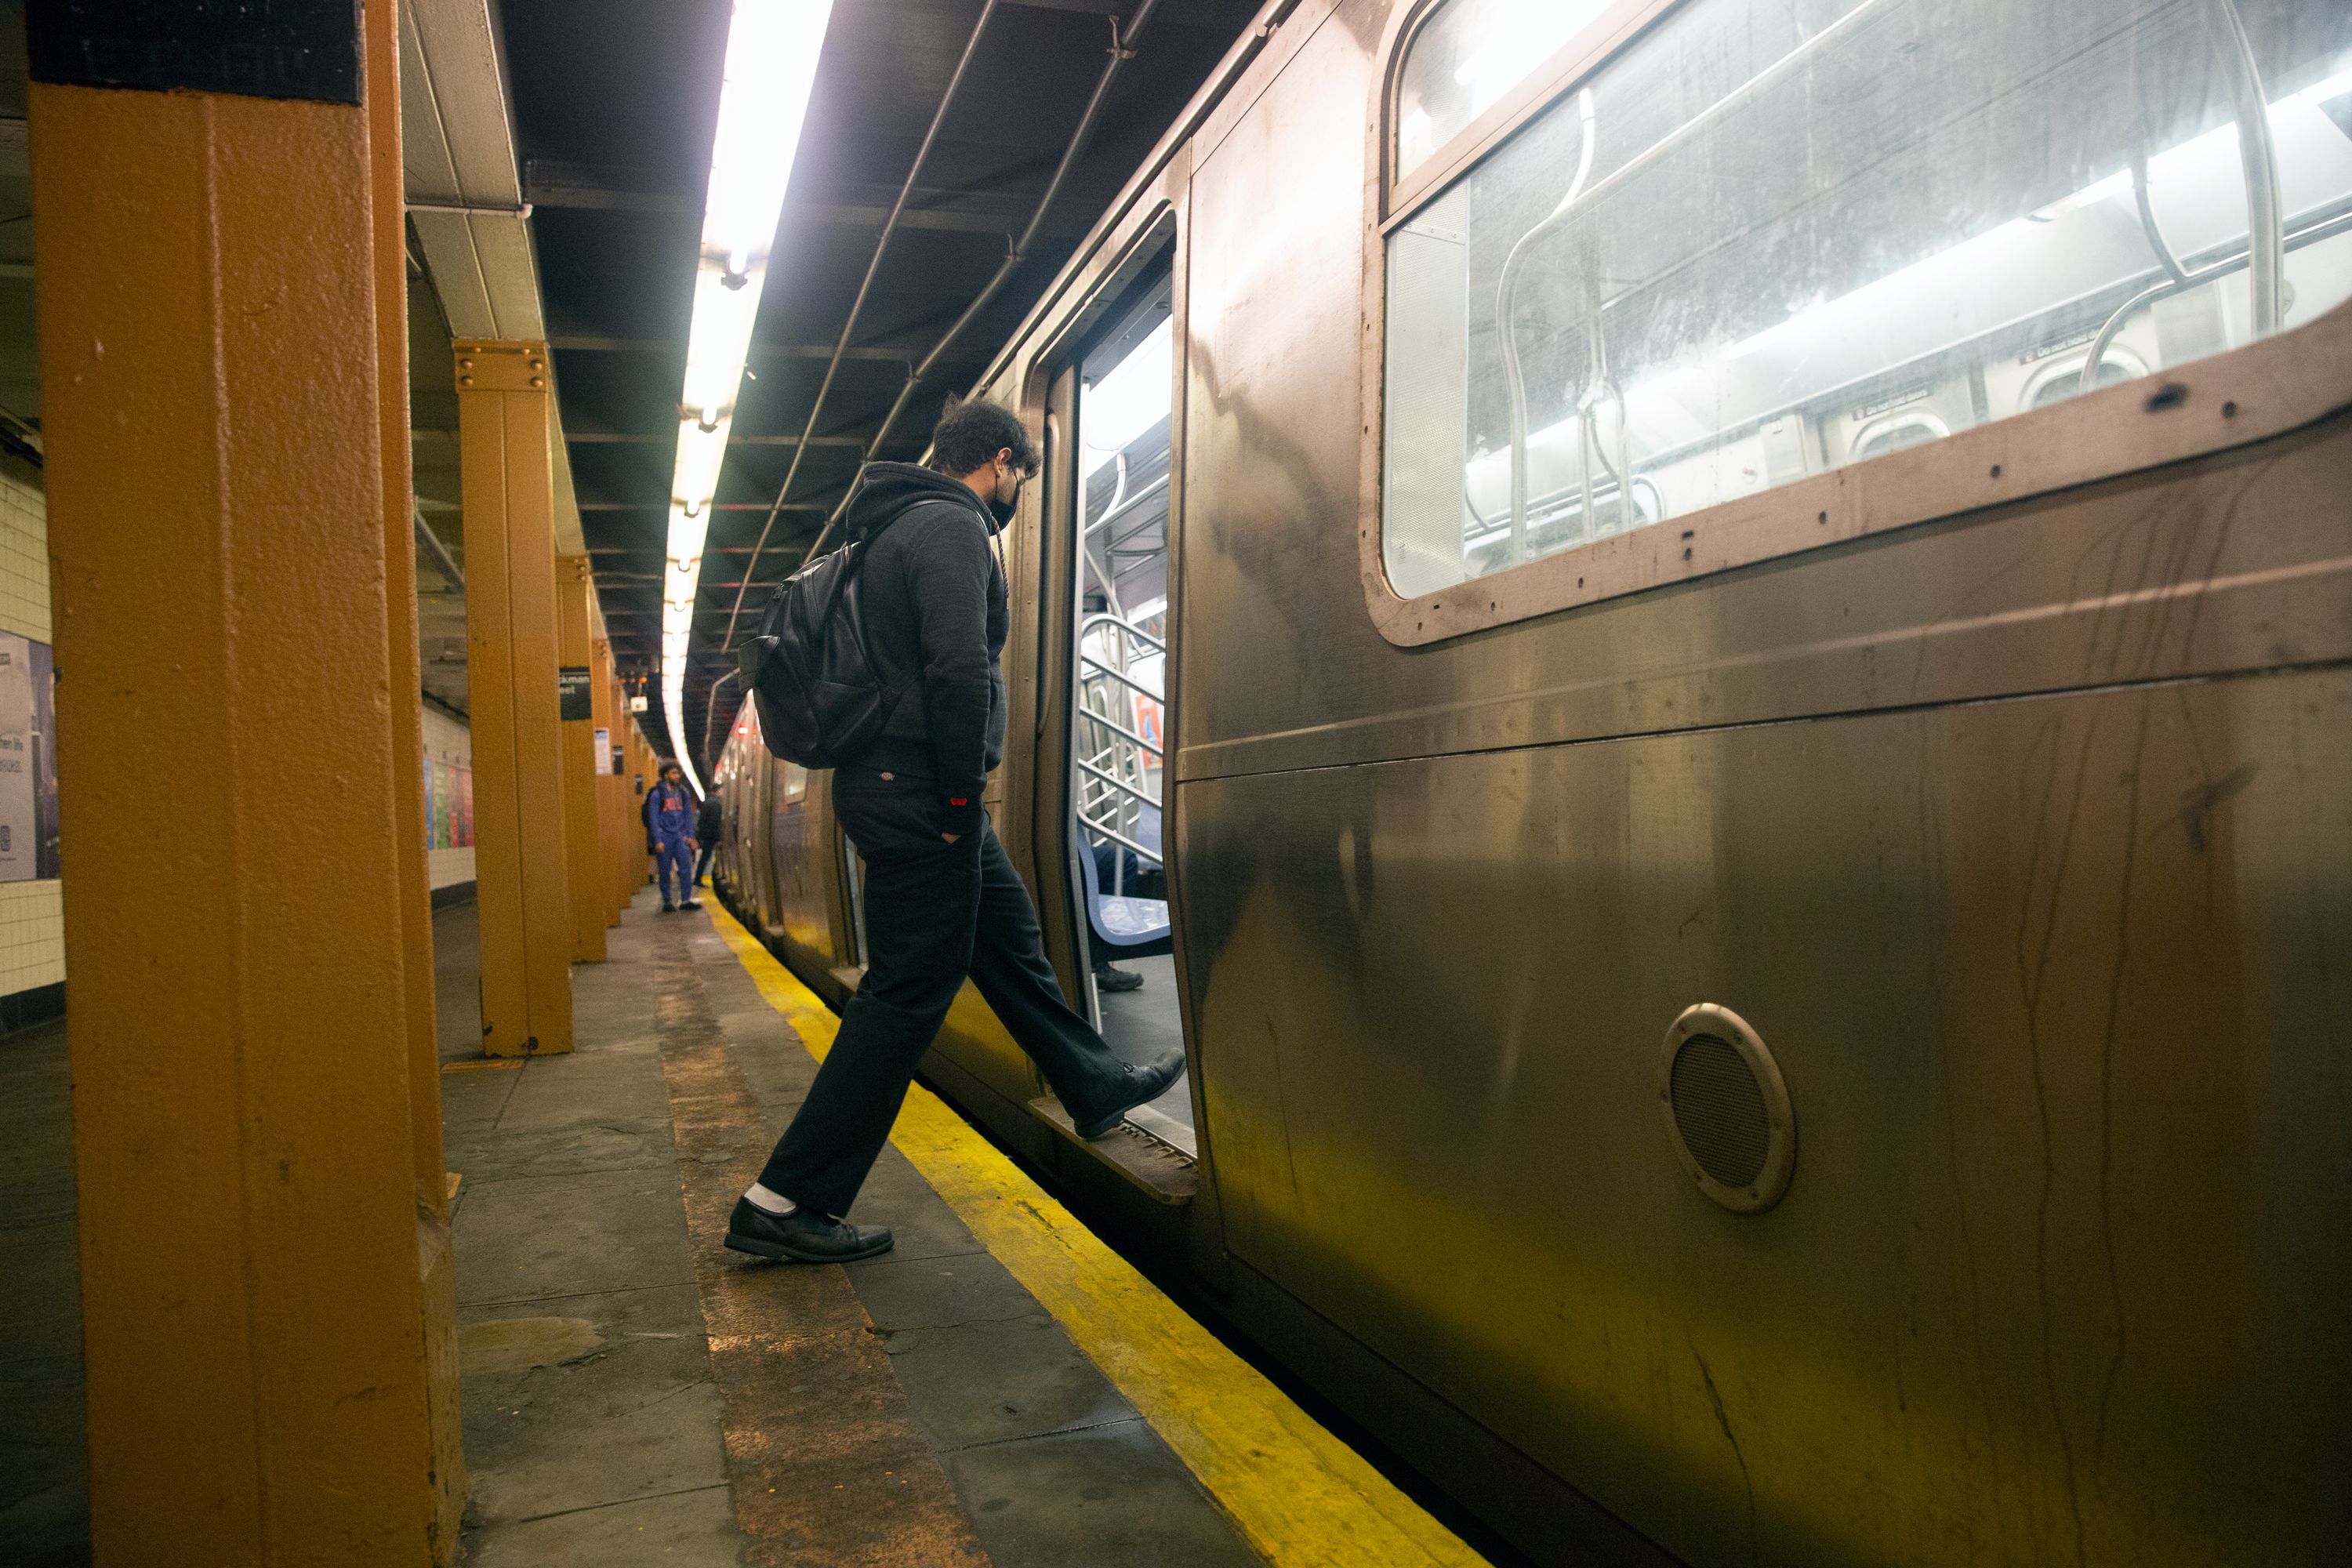 A commuter enters an A train at Dyckman Street in Manhattan, Feb. 23, 2022.